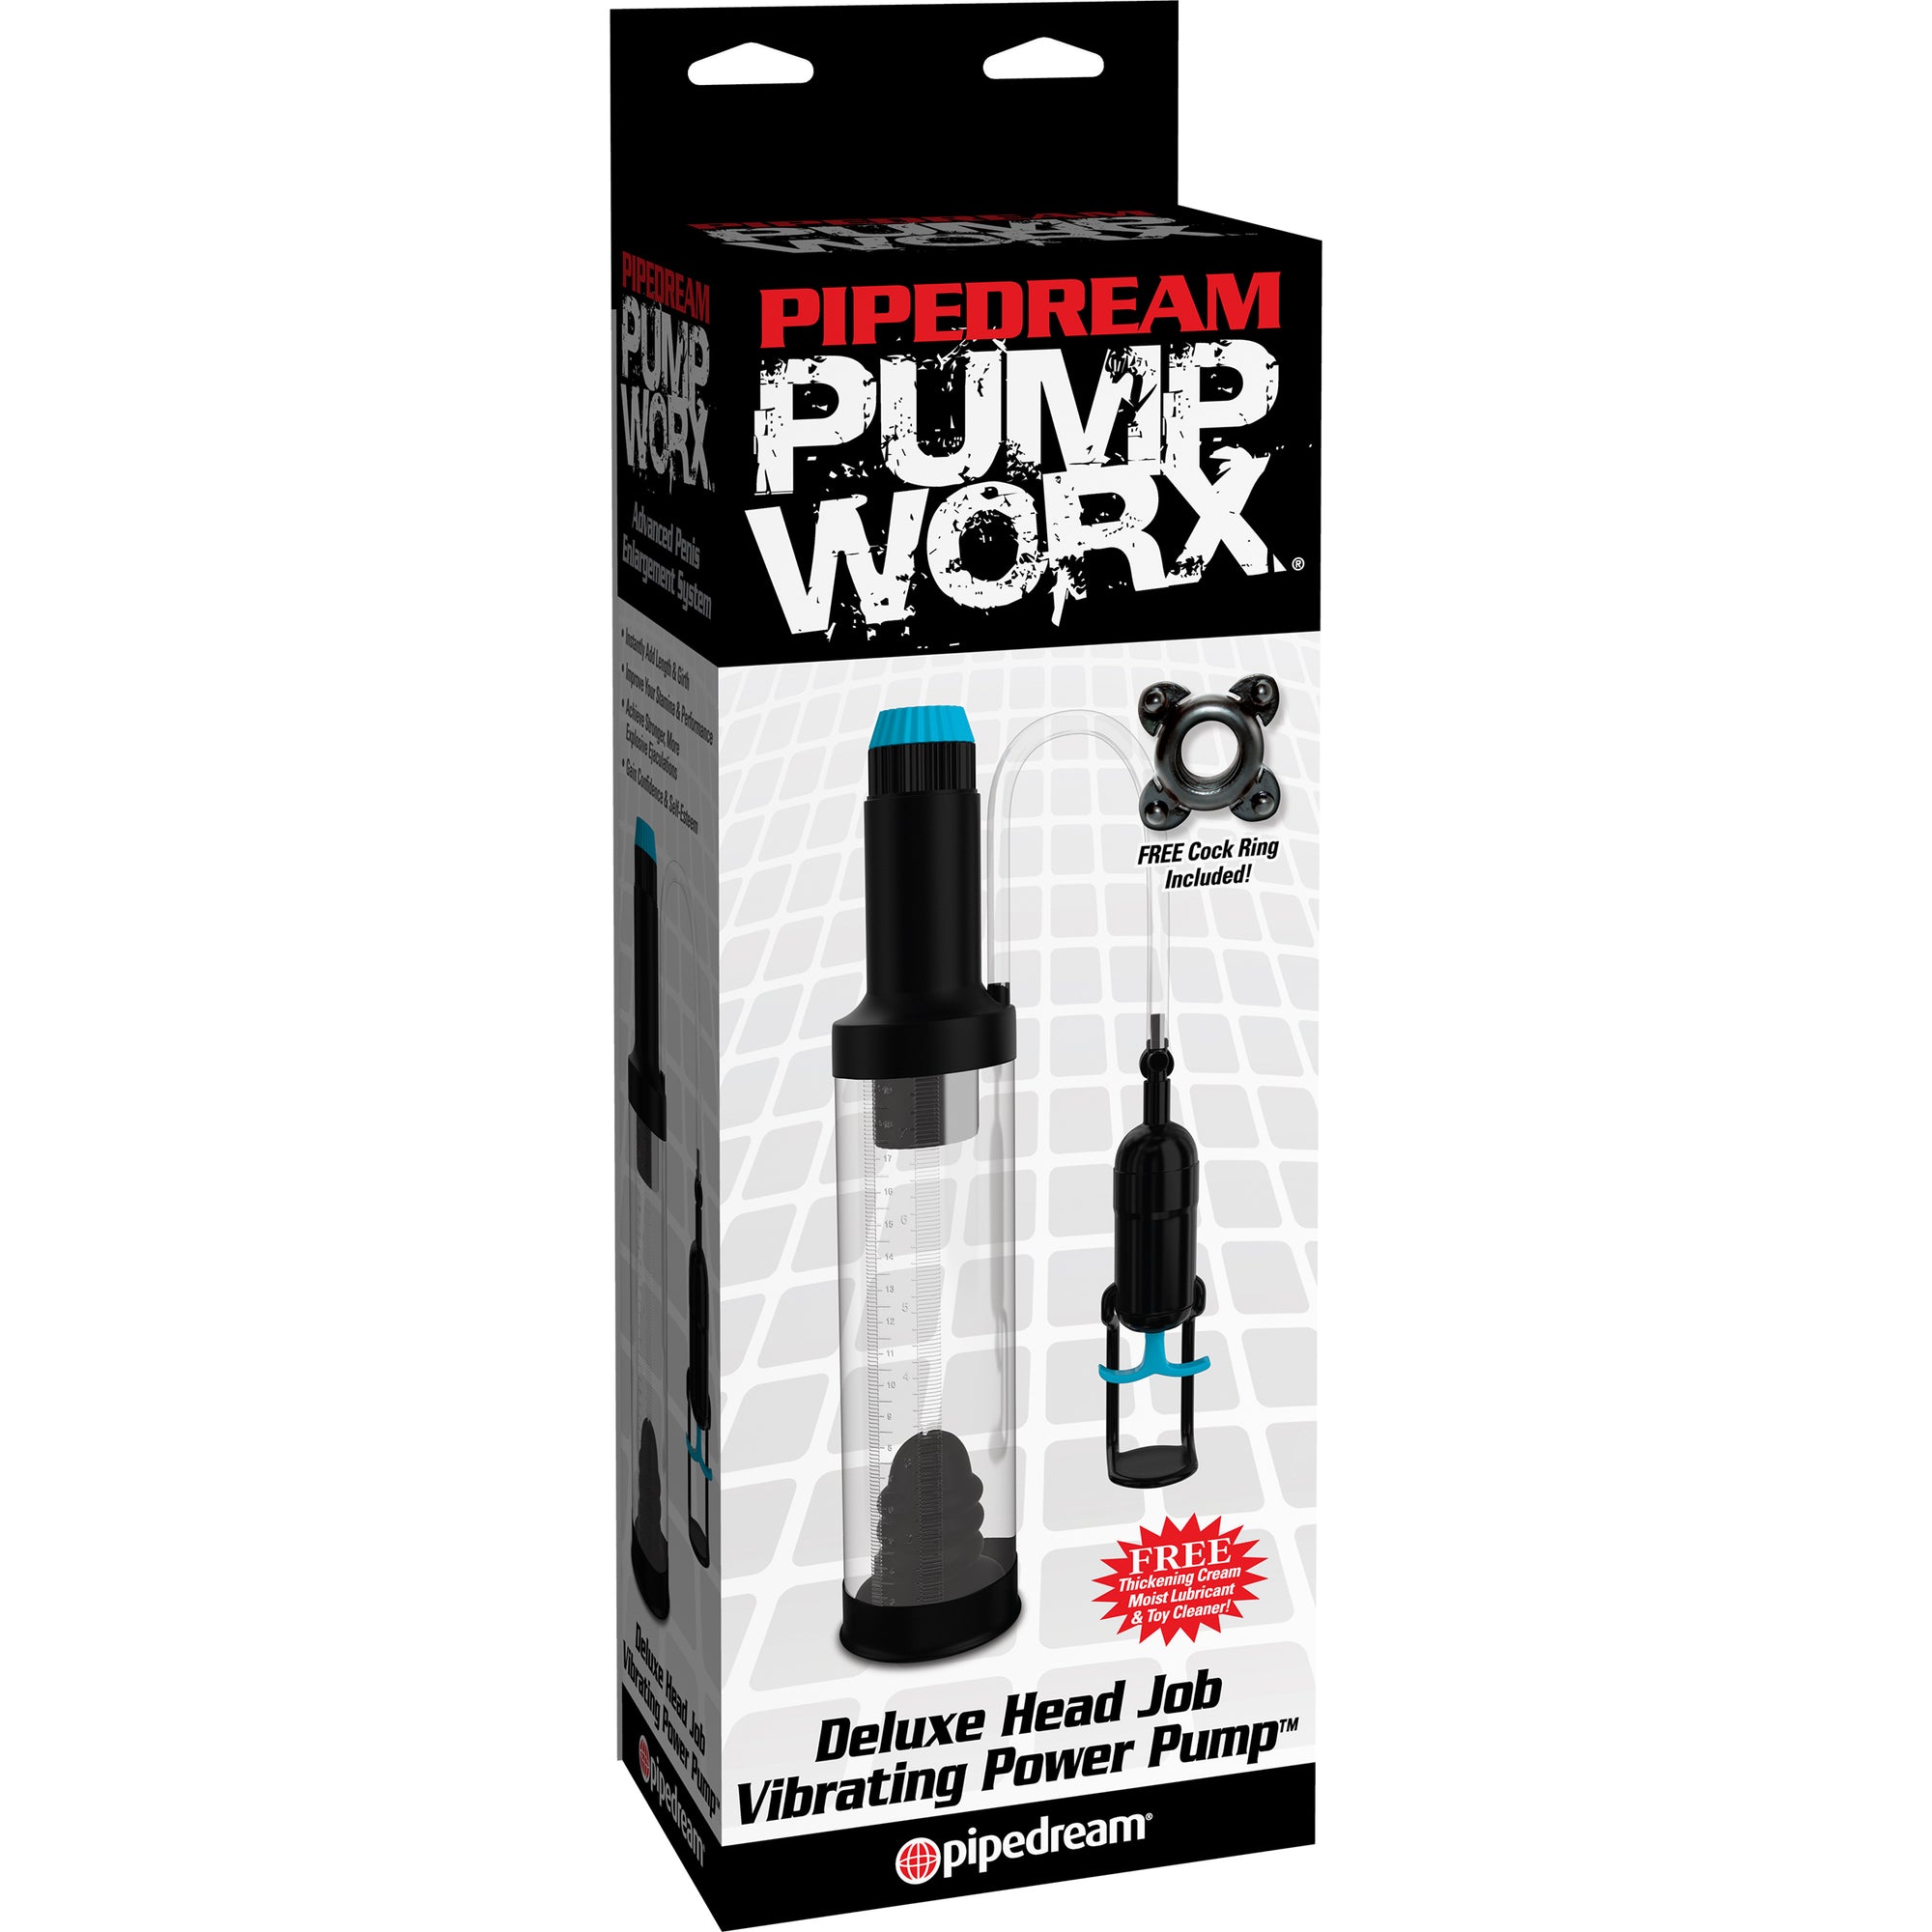 Pipedream - Pump Worx Deluxe Head Job Vibrating Power Pump